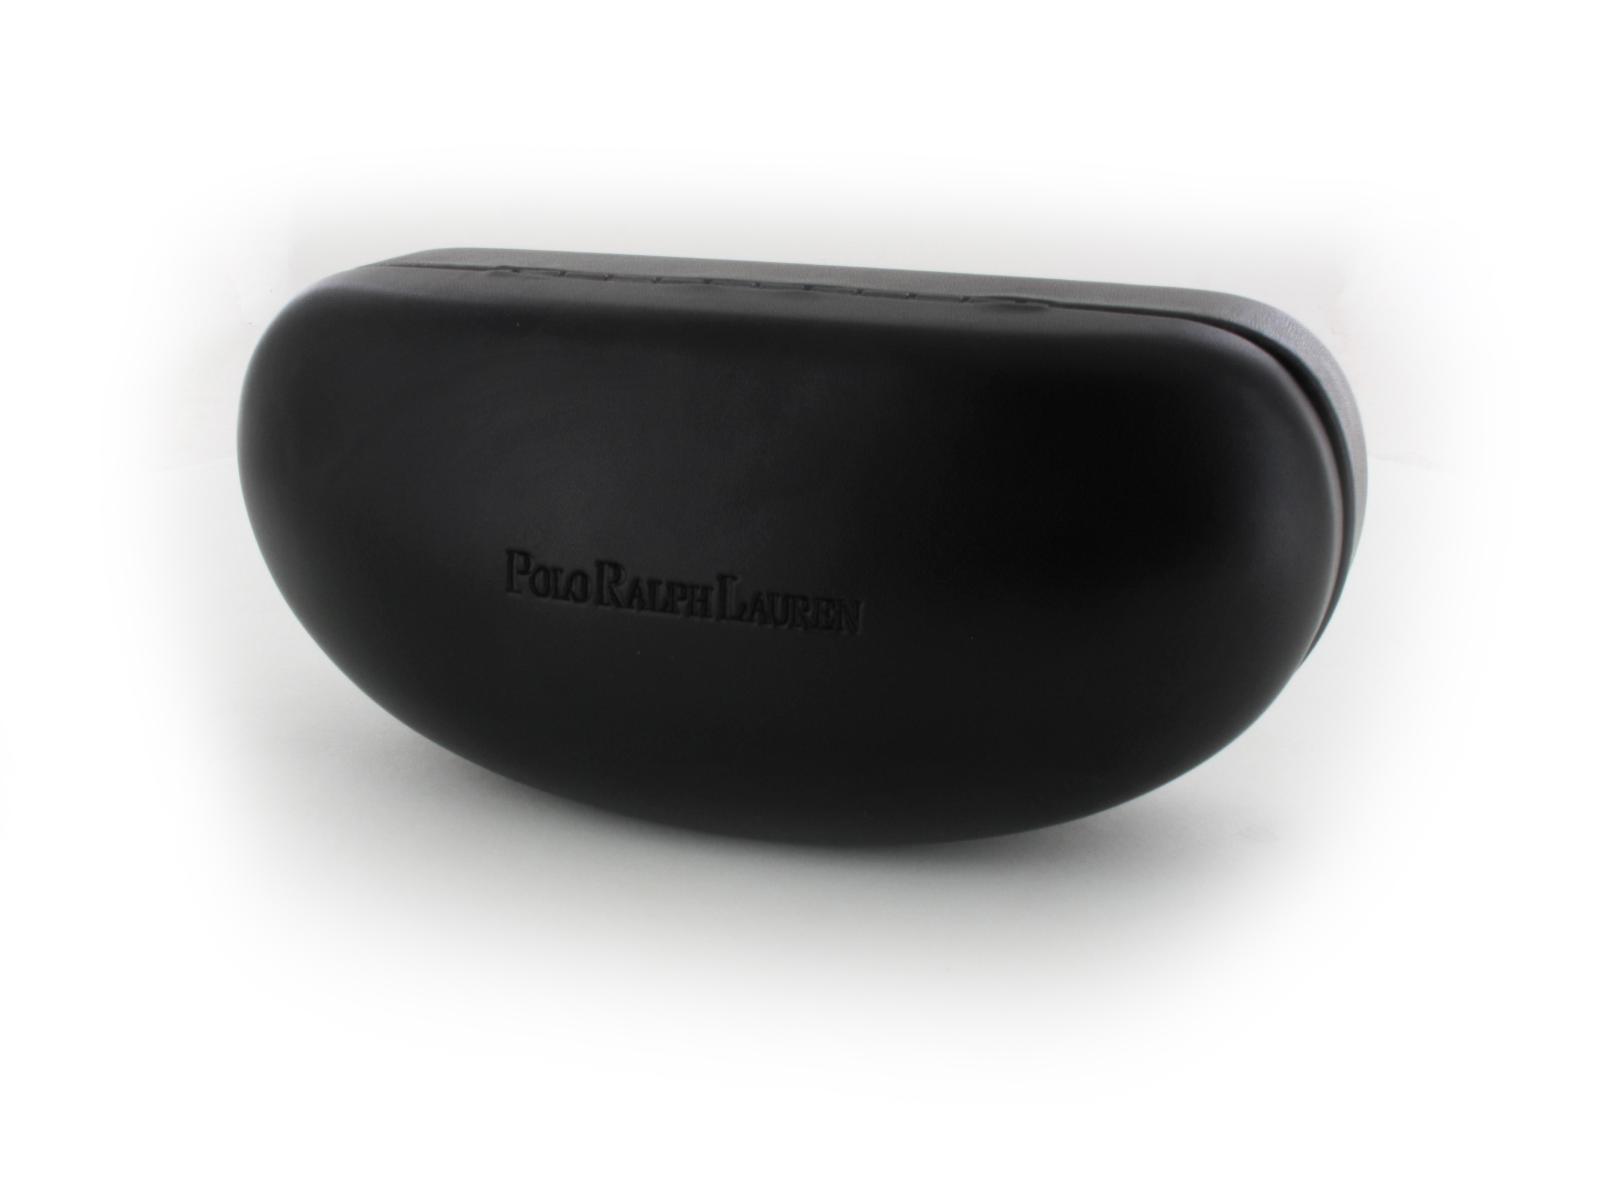 Polo Ralph Lauren | PH4175 500187 57 | shiny black / dark grey